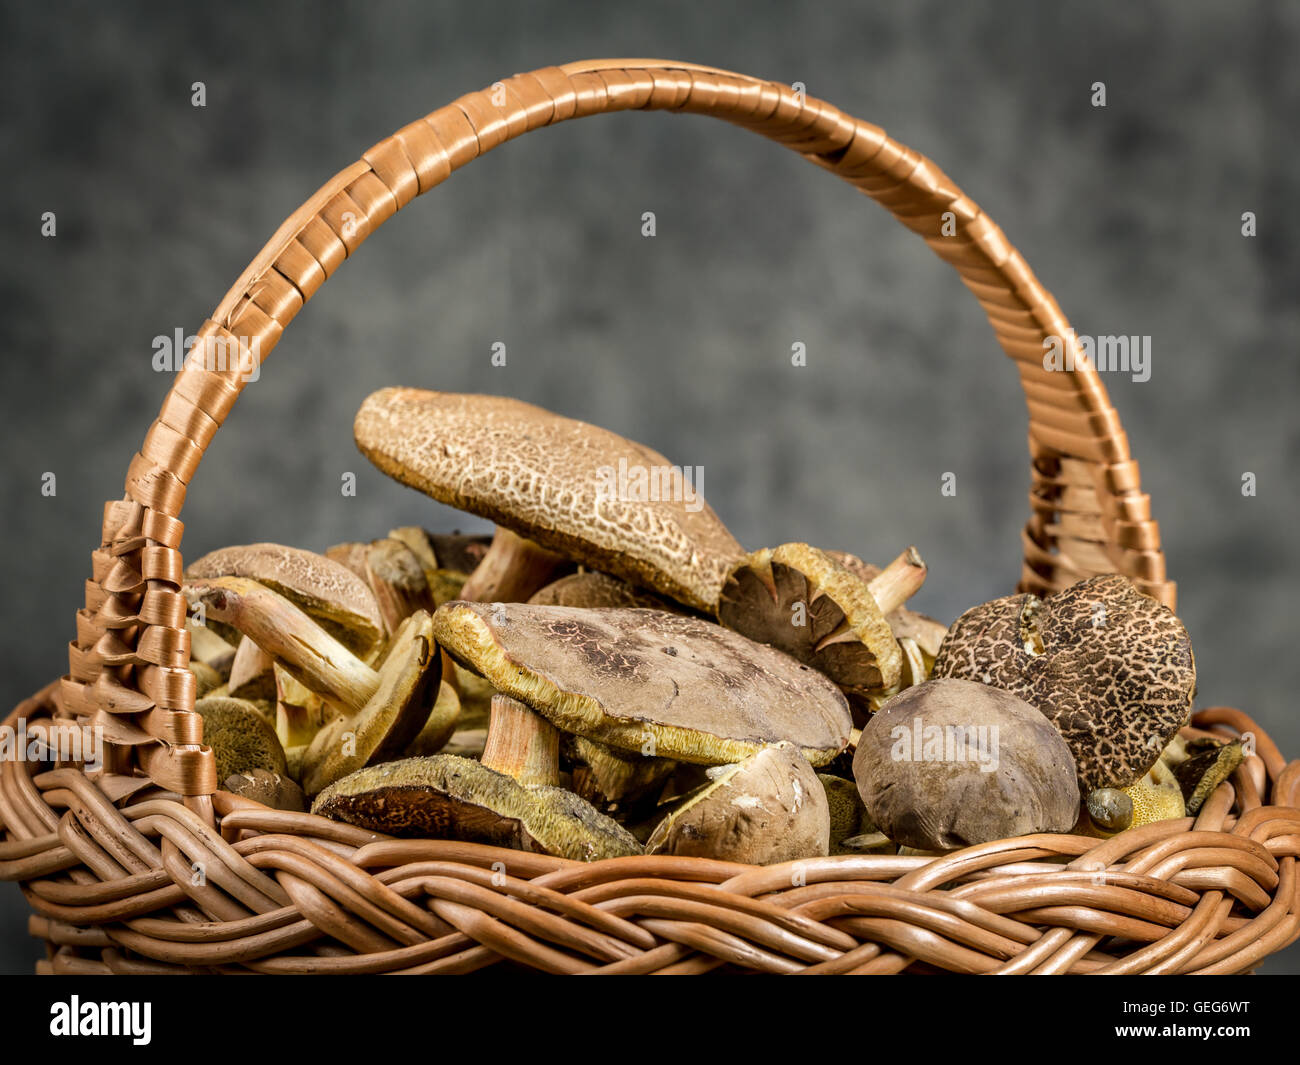 Wicker basket full of edible mushrooms on wooden table Stock Photo